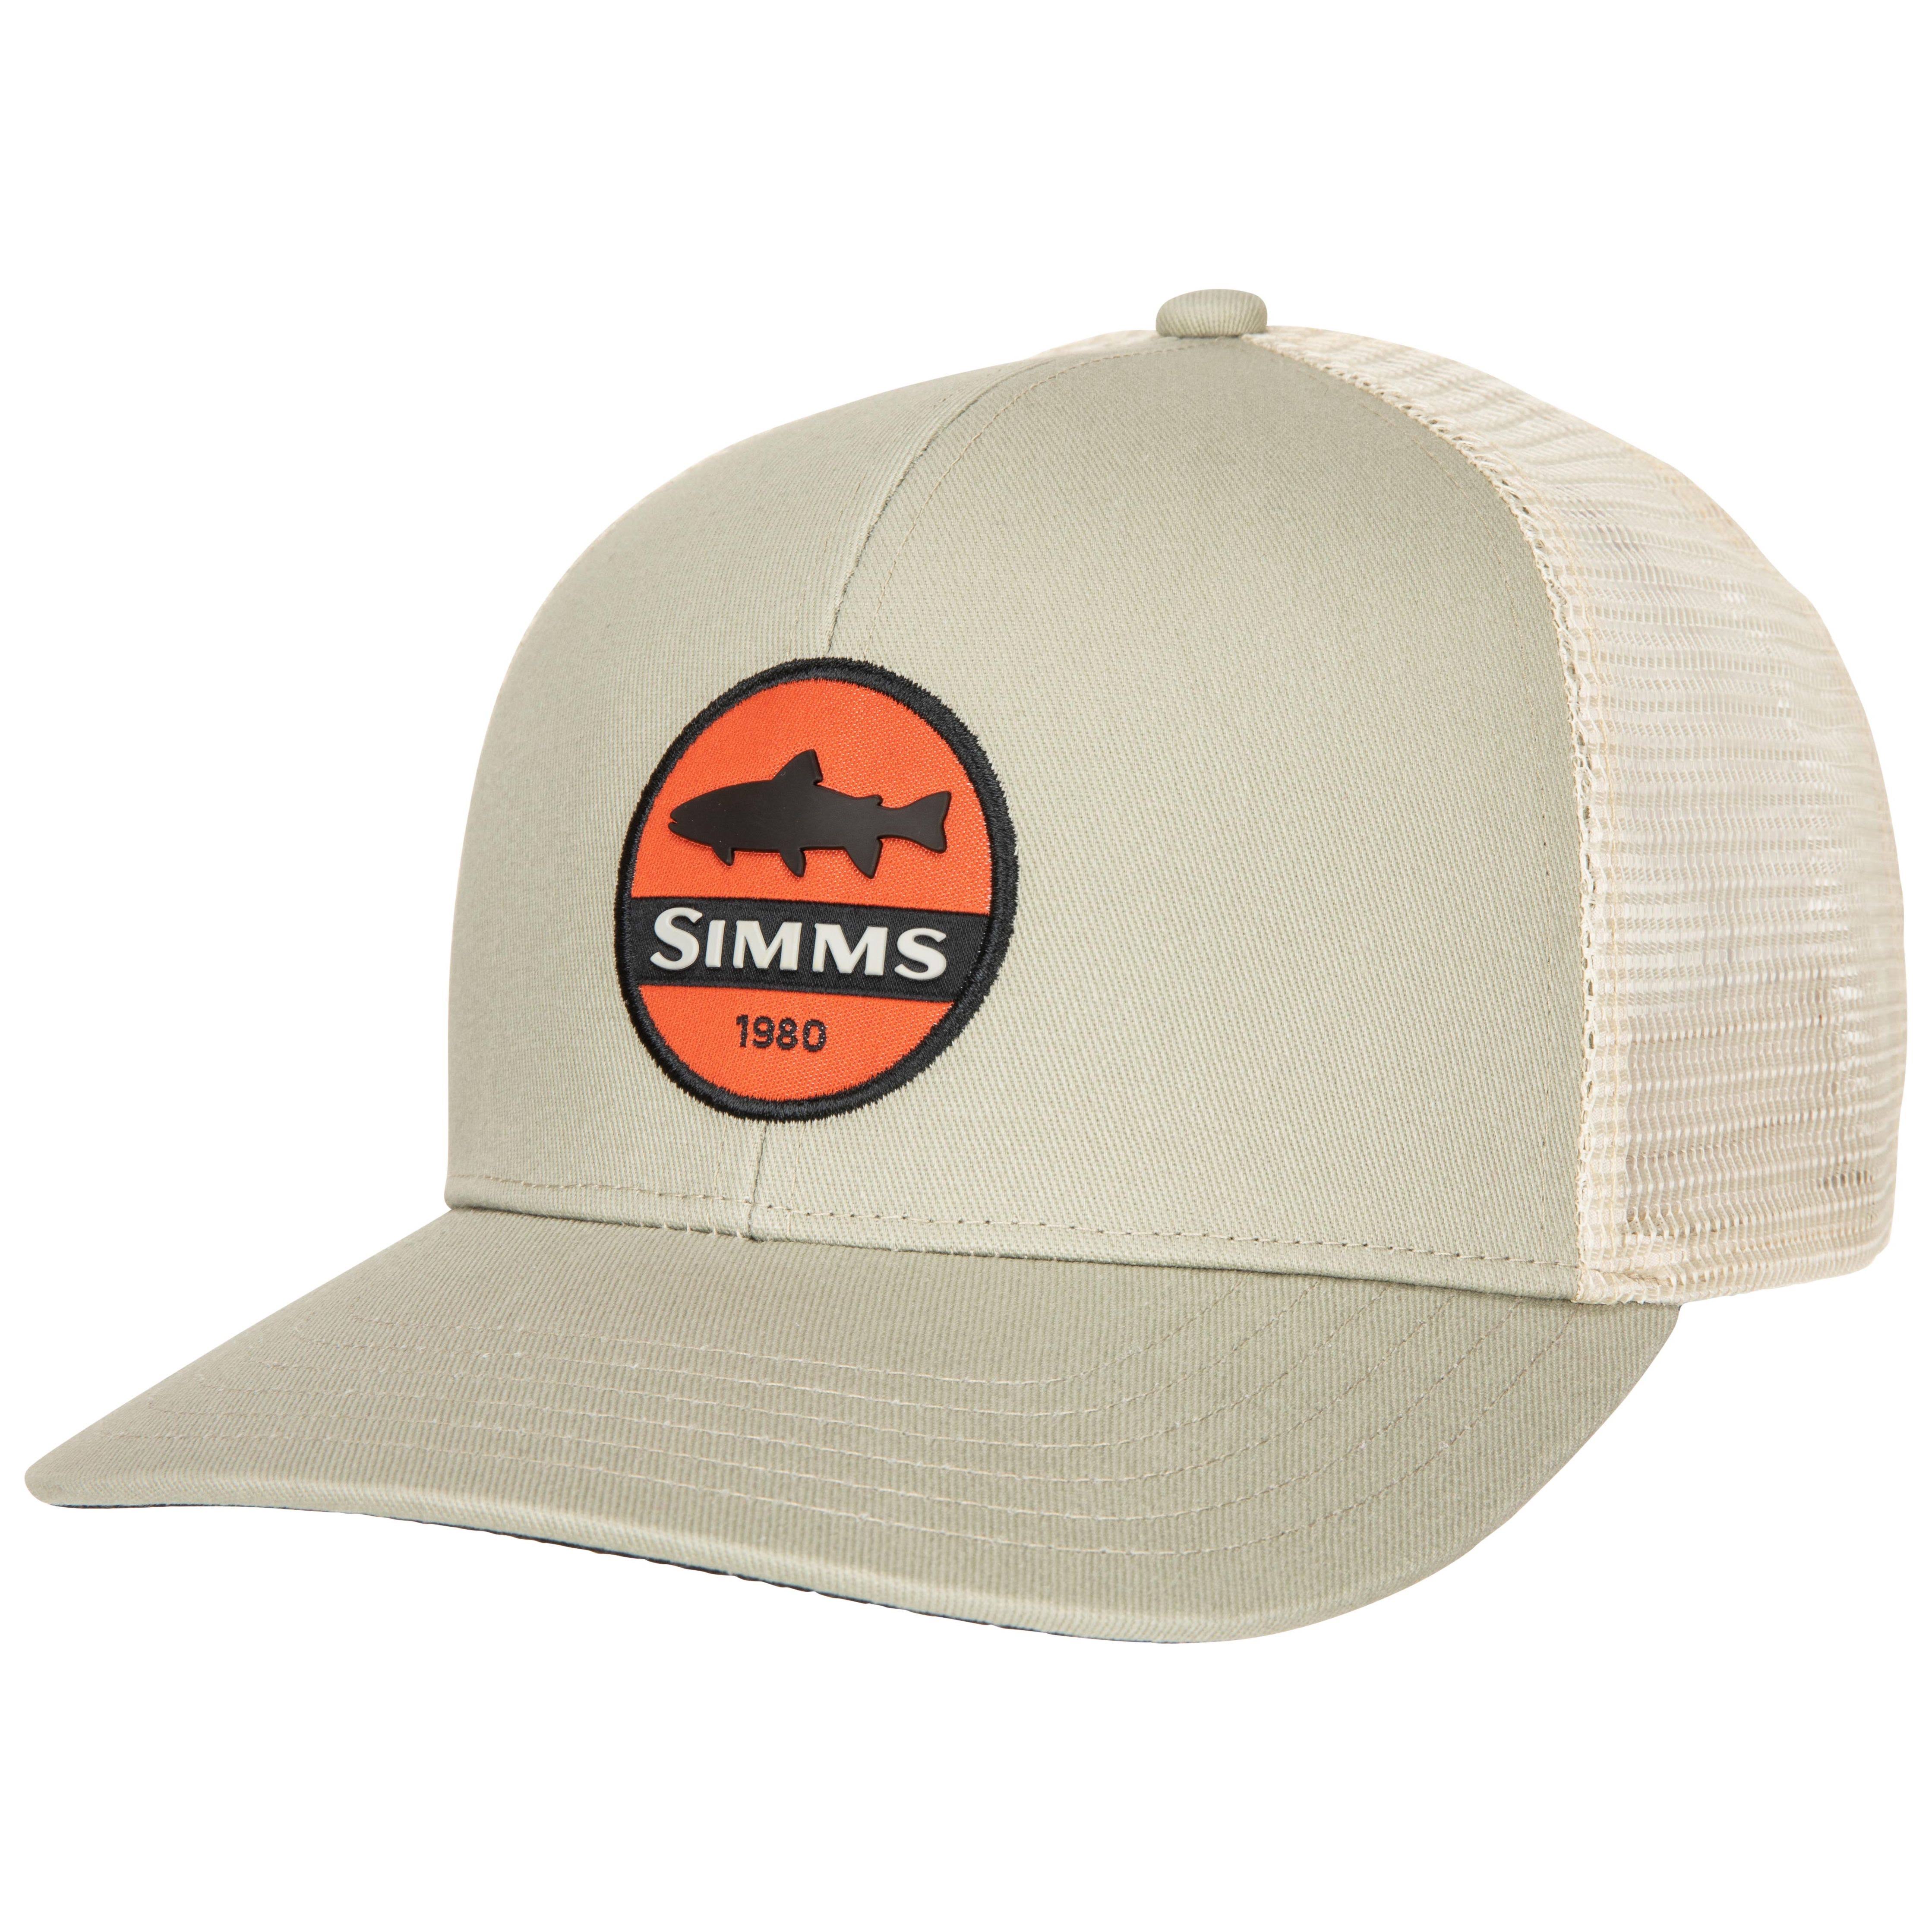 Simms Trout Patch Trucker Hat - Khaki